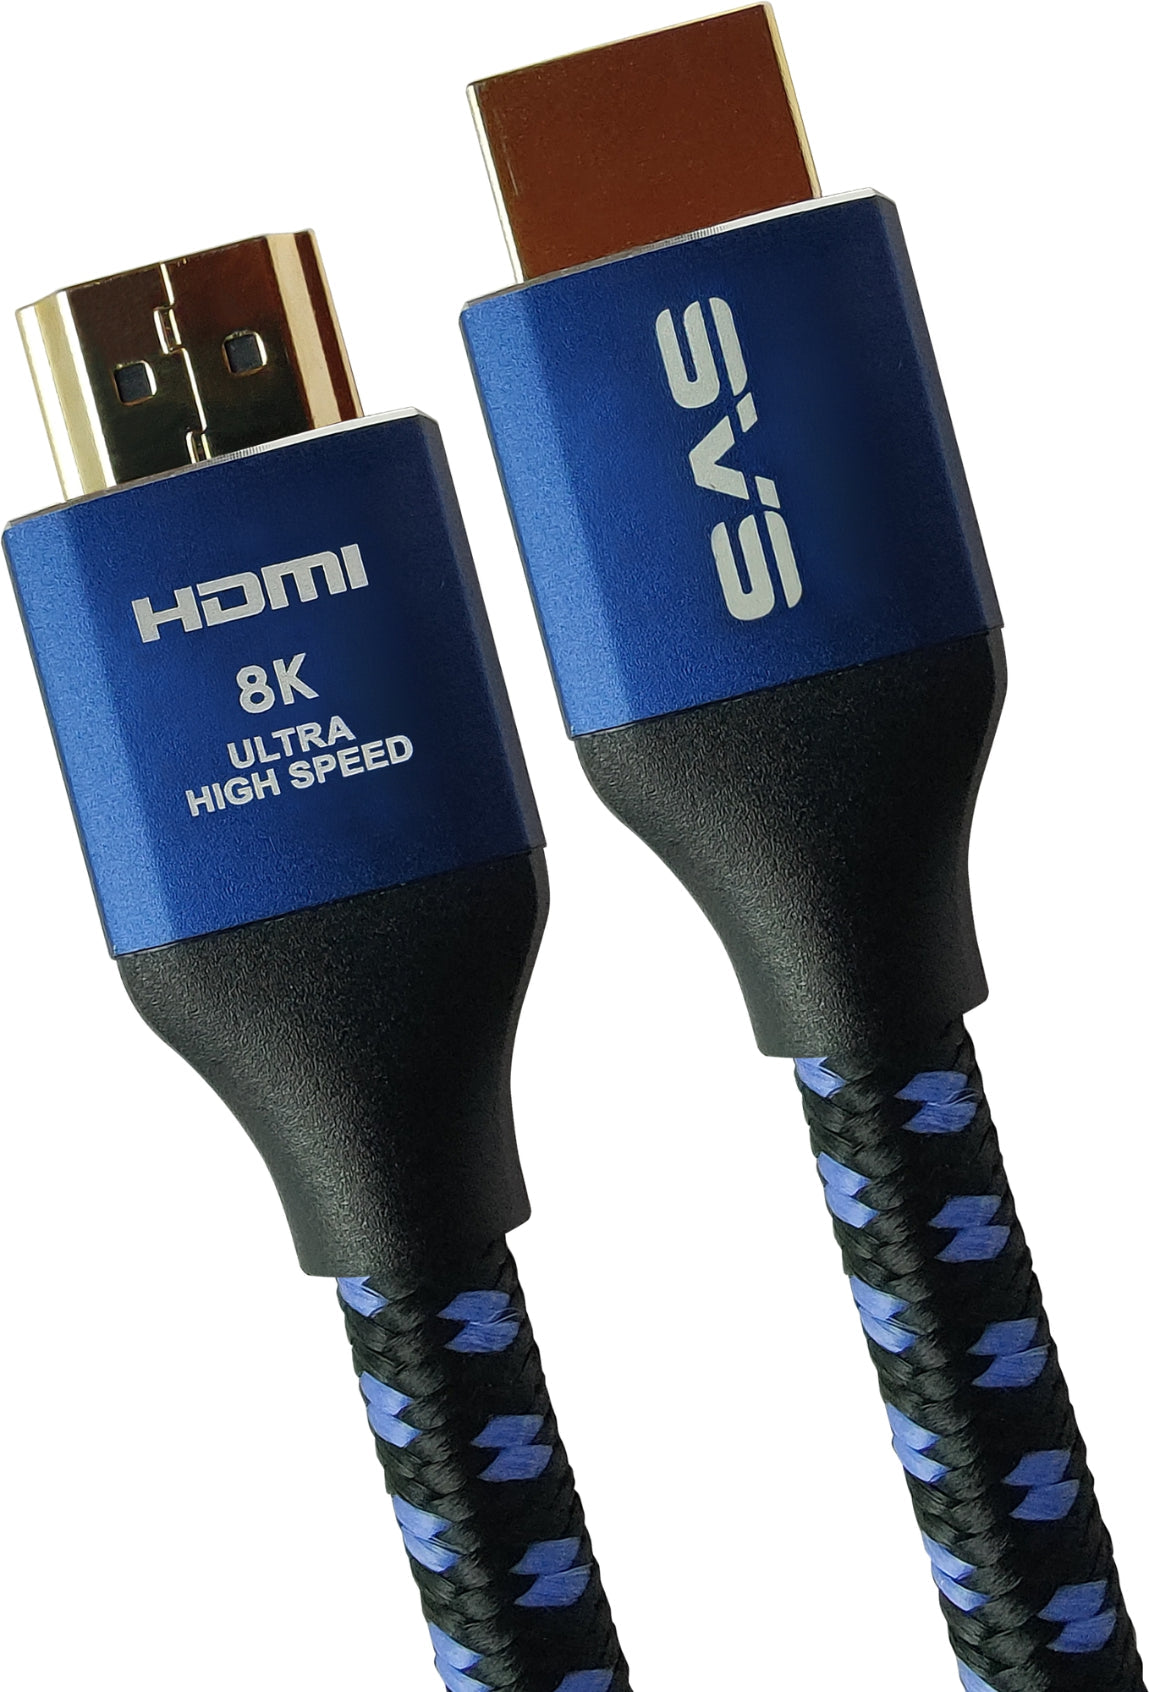 SVS SoundPath HDMI Cable